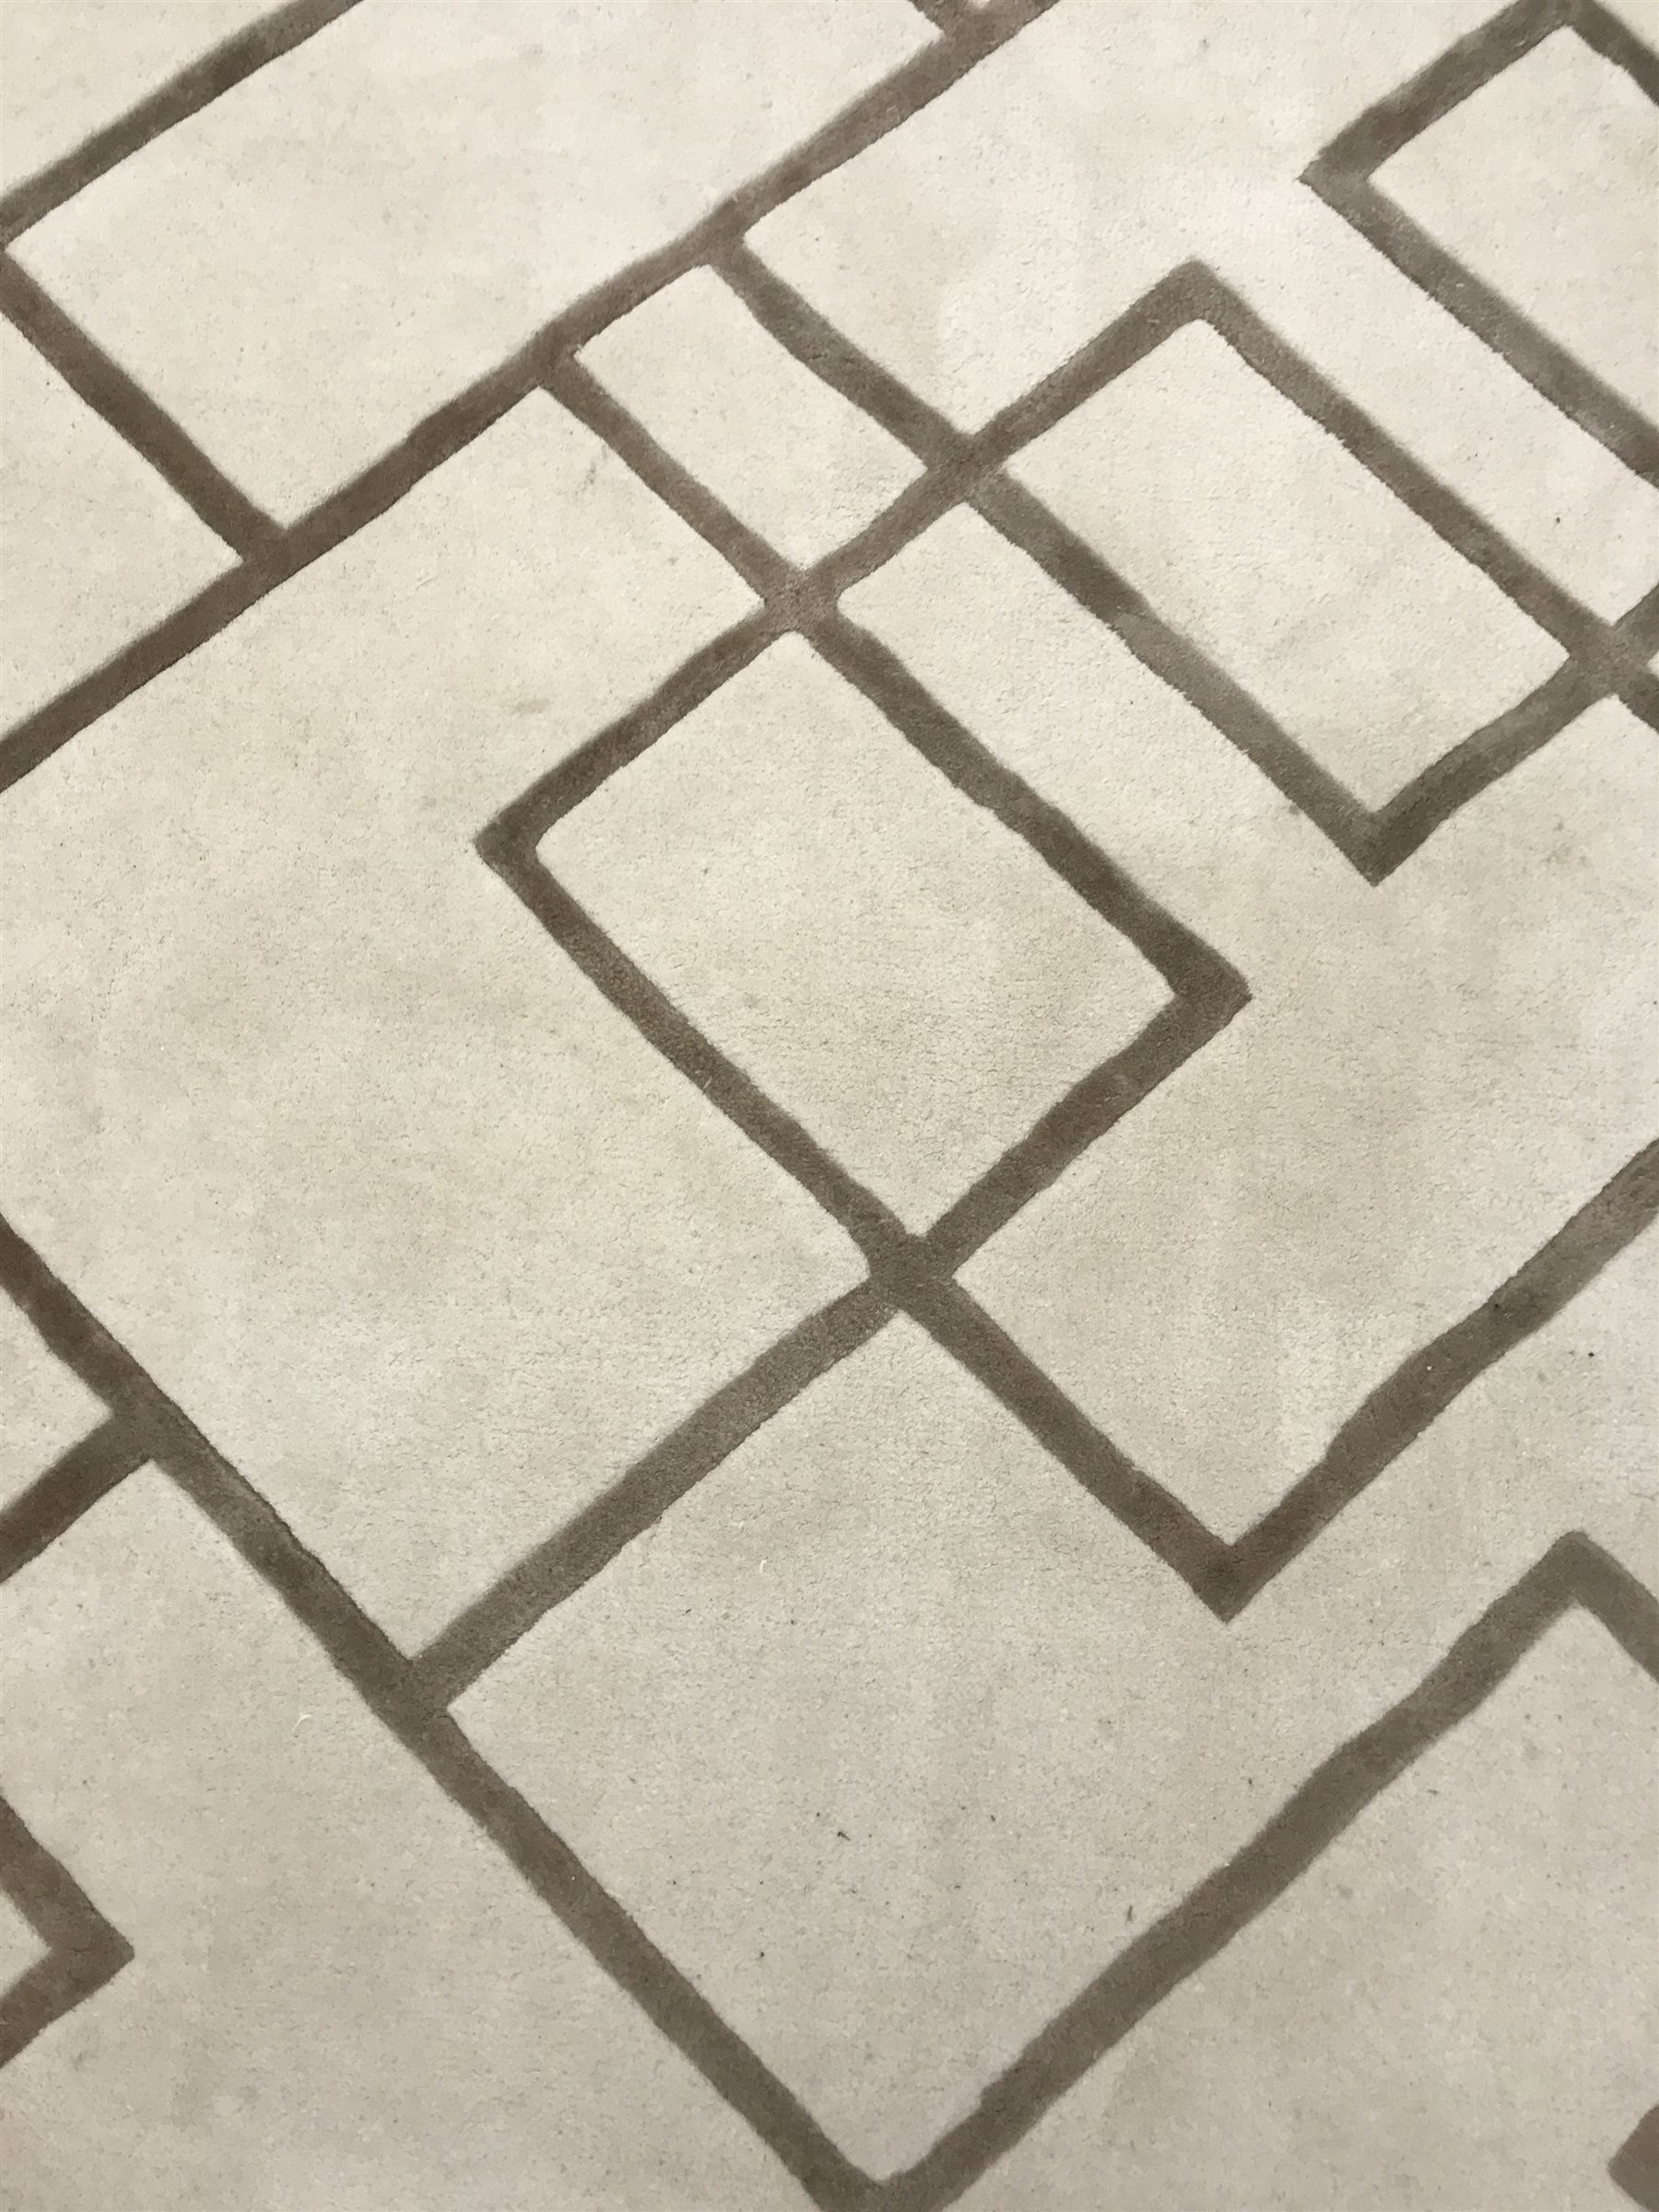 Modern beige ground rug, geometric patterned field, 290cm x 200cm - Image 3 of 4